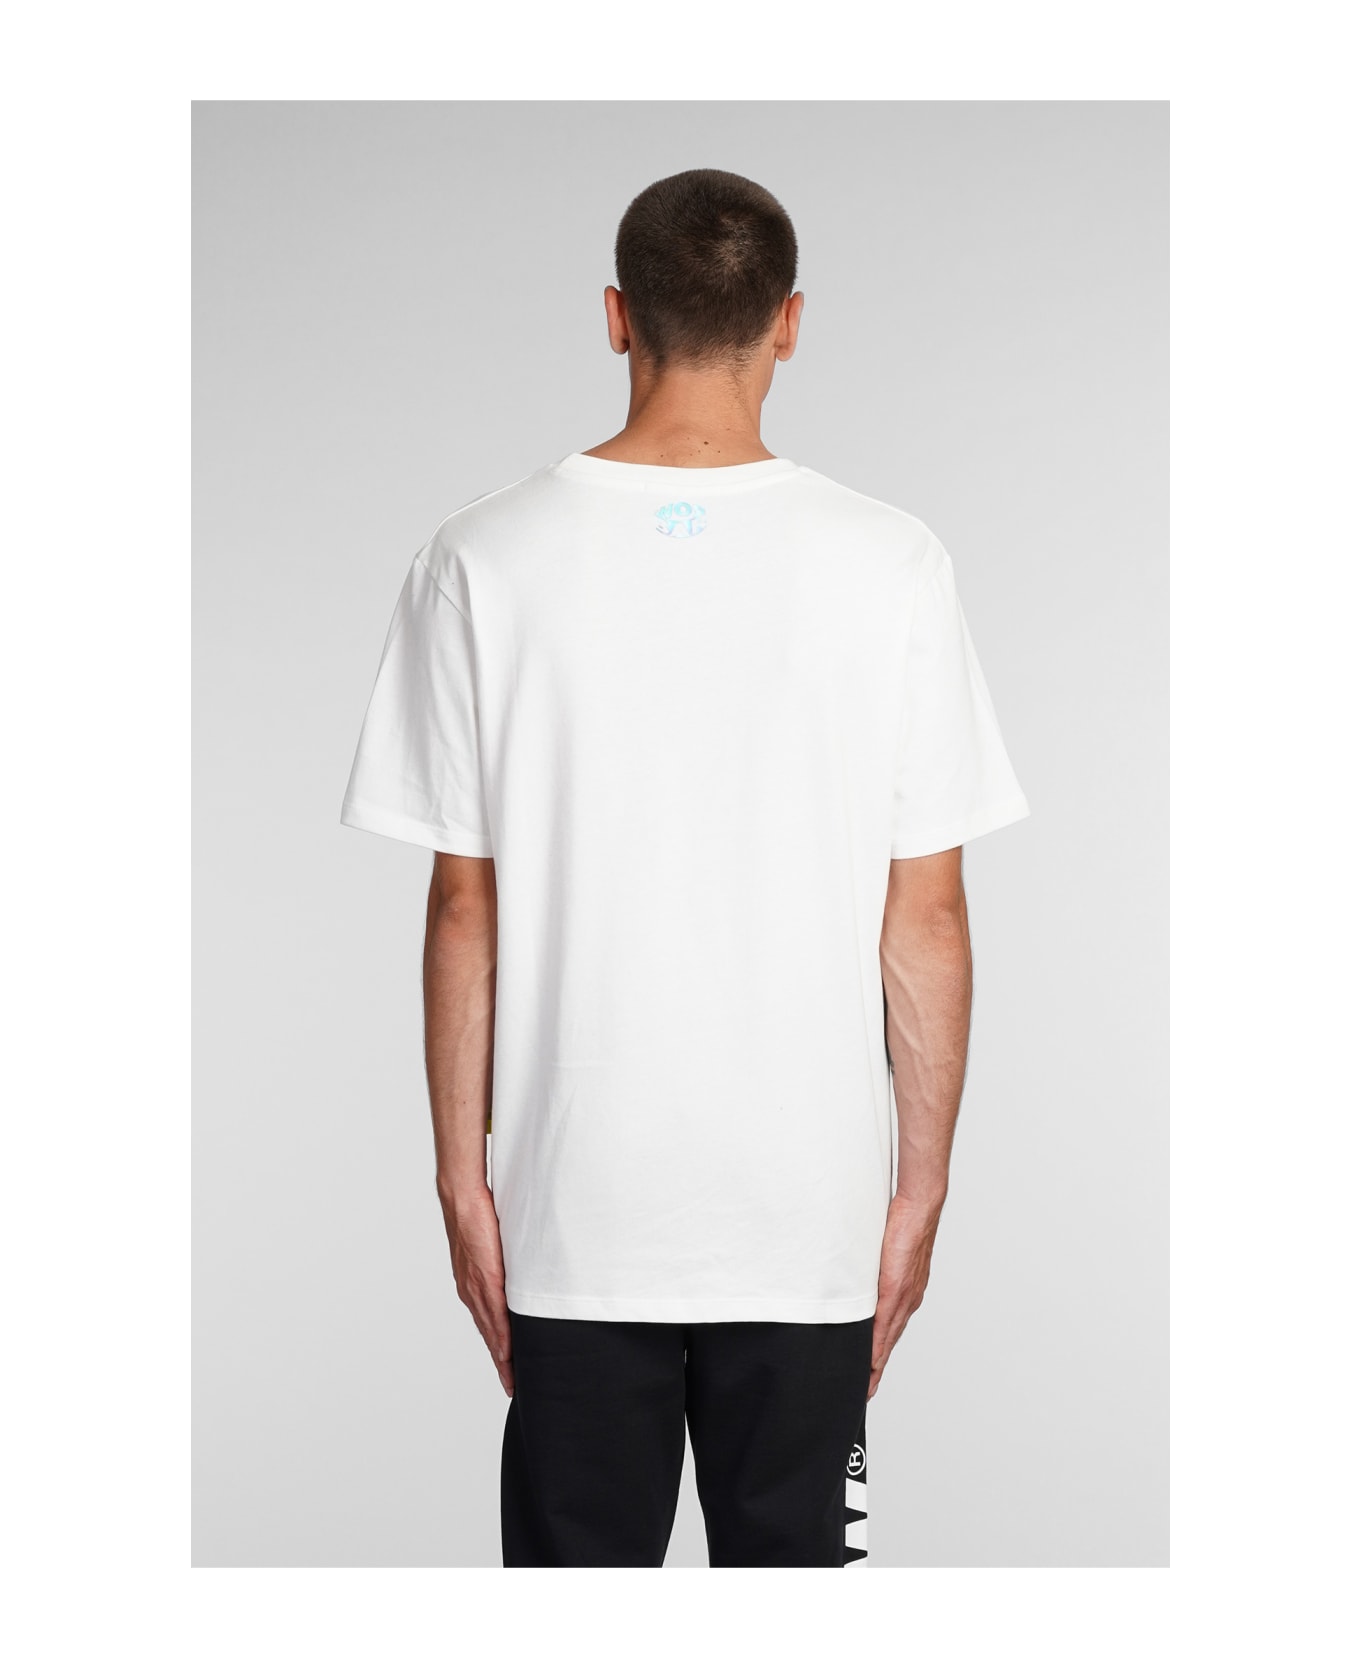 Barrow T-shirt In White Cotton - white